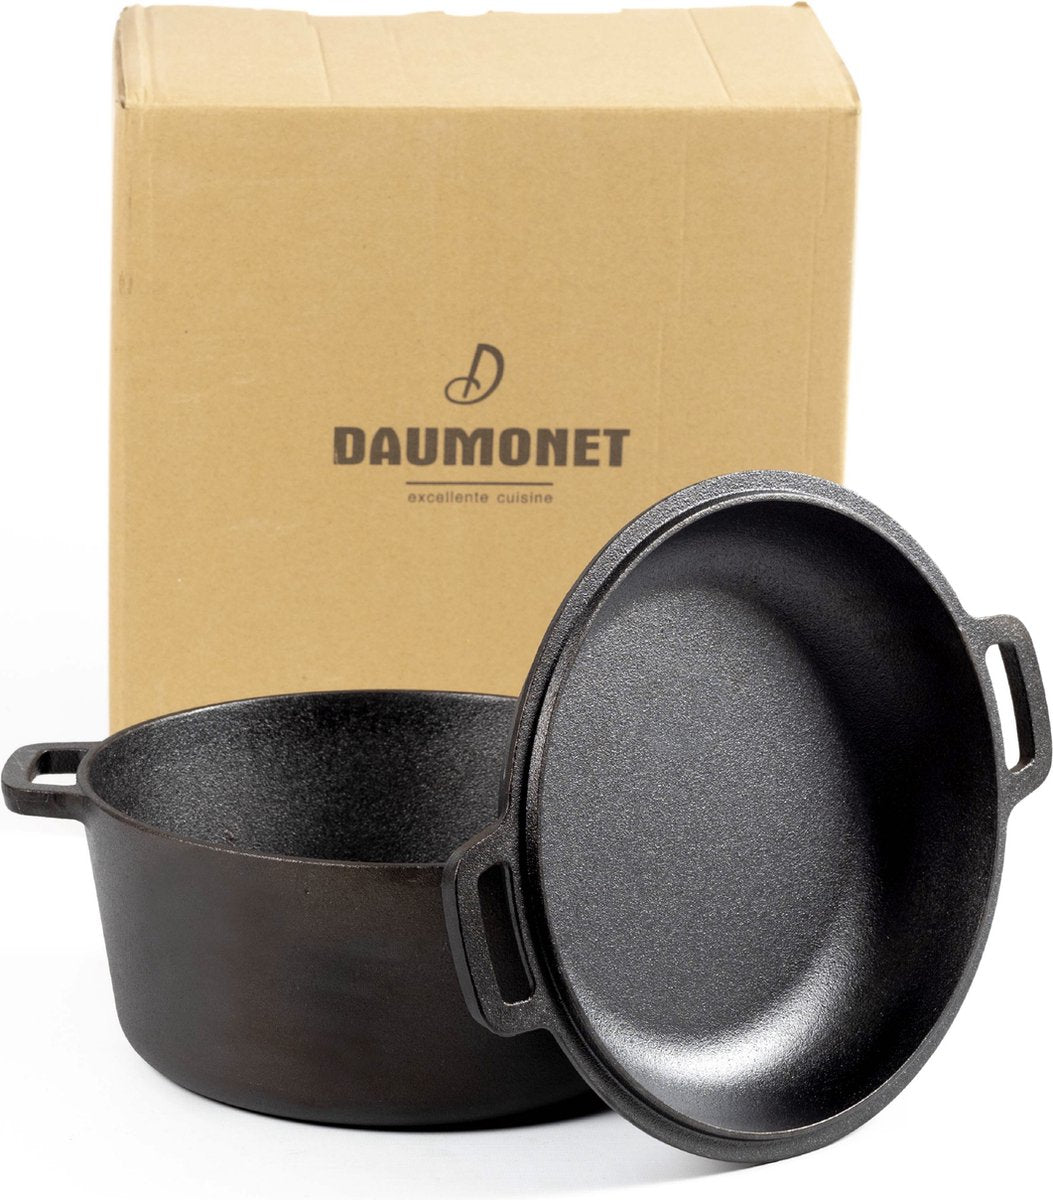 Daumonet Ducasse cast iron Double use frying pan - 2 -in -1 baking and frying pan - Ø 26 cm - 4.4 liters